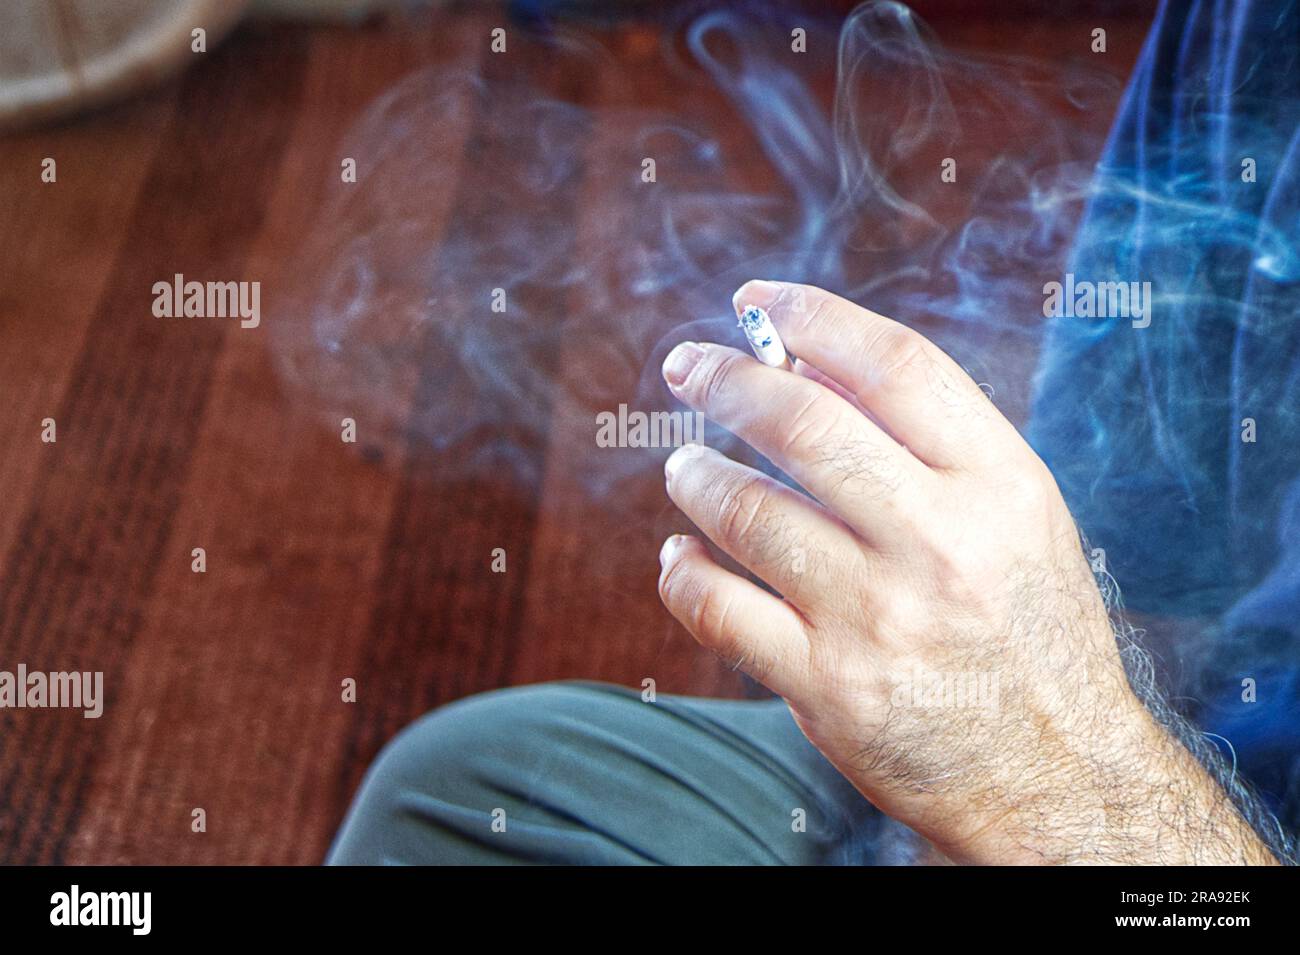 Hand of a man smoking a cigarette, producing smoke and health damage Stock Photo